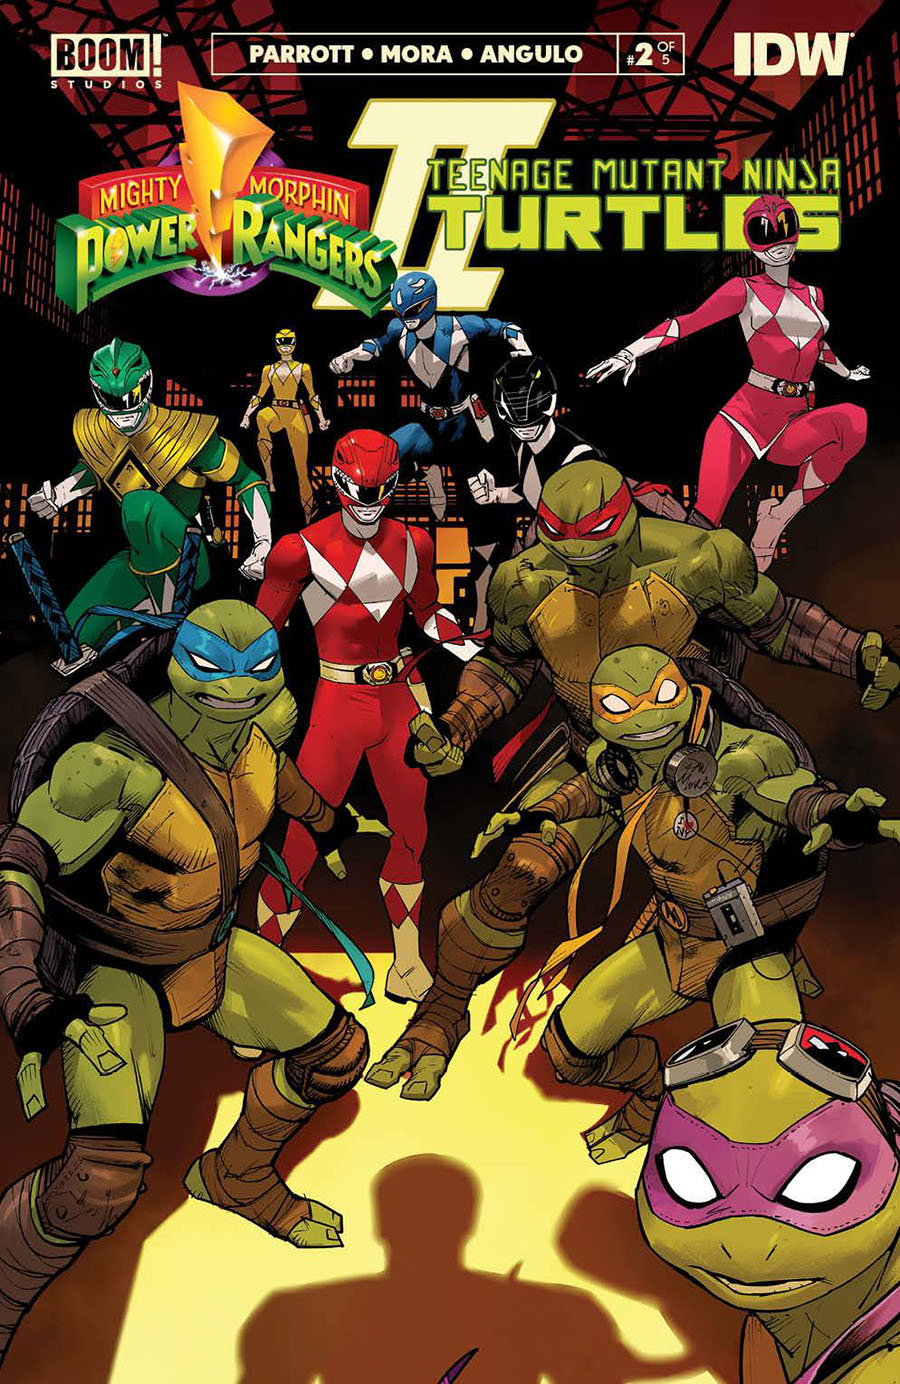 Mighty Morphin Power Rangers Teenage Mutant Ninja Turtles II #2 Cover A Regular Dan Mora Cover